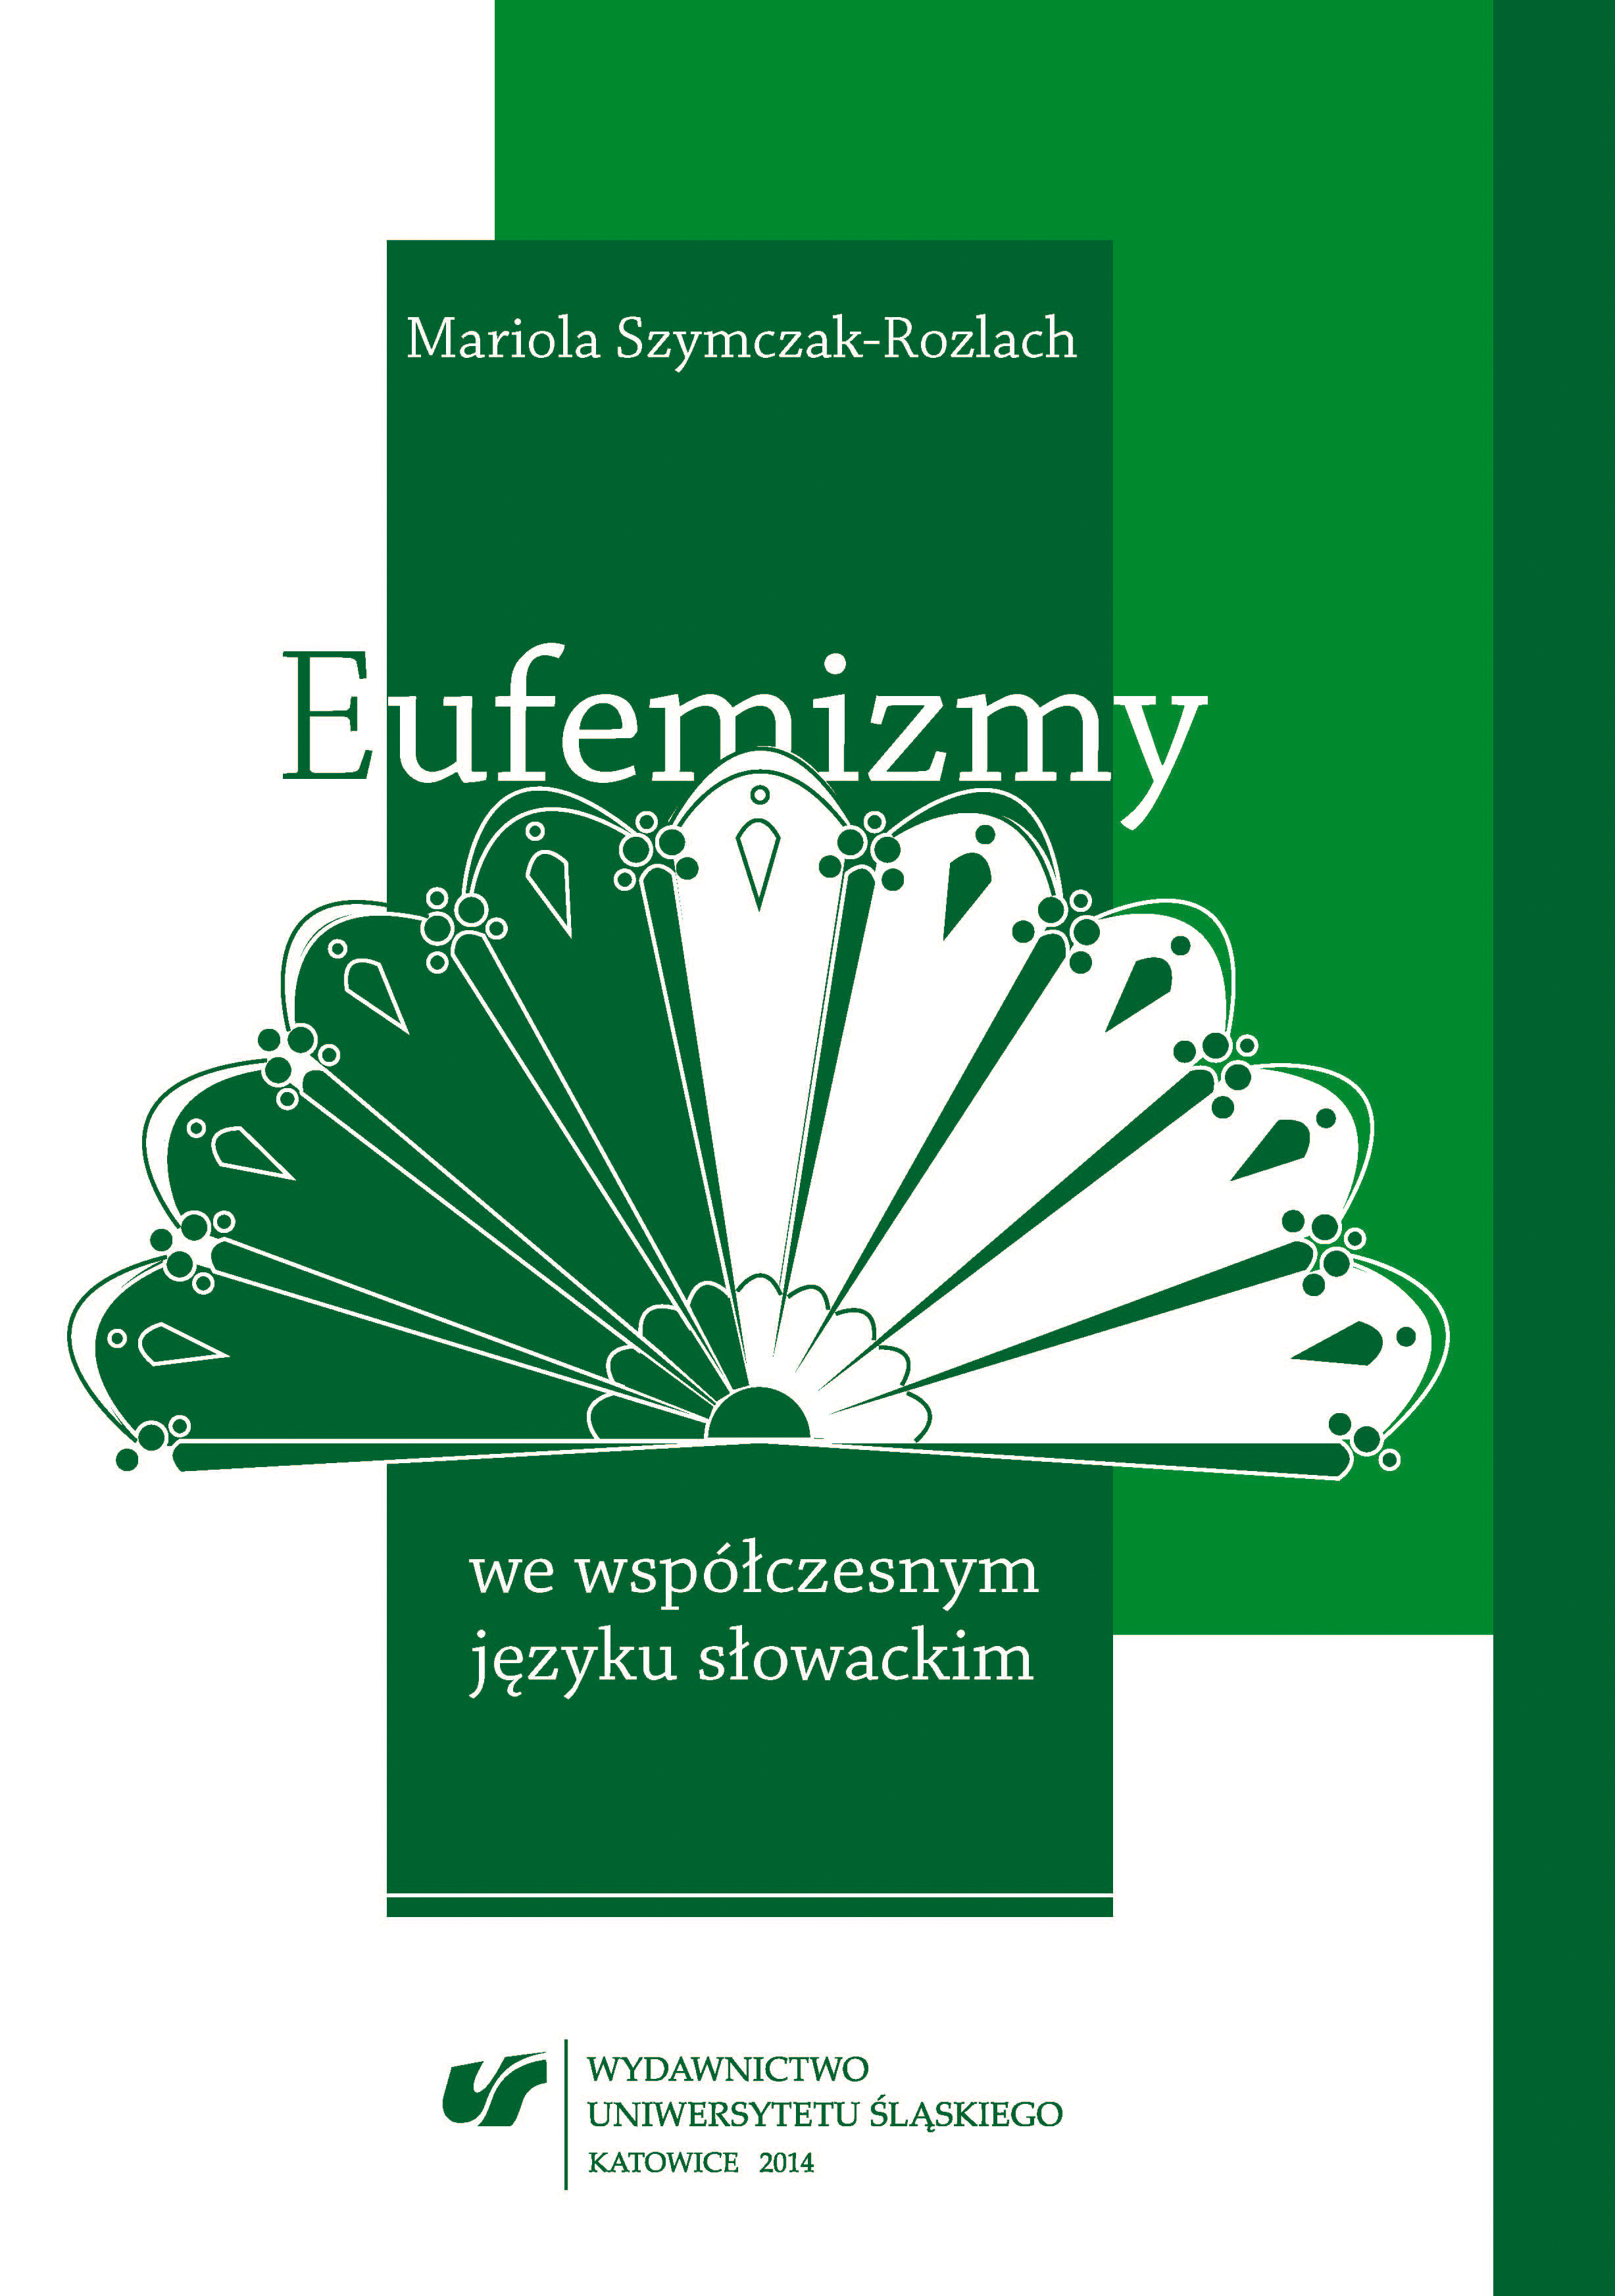 Euphemisms in contemporary Slovak language